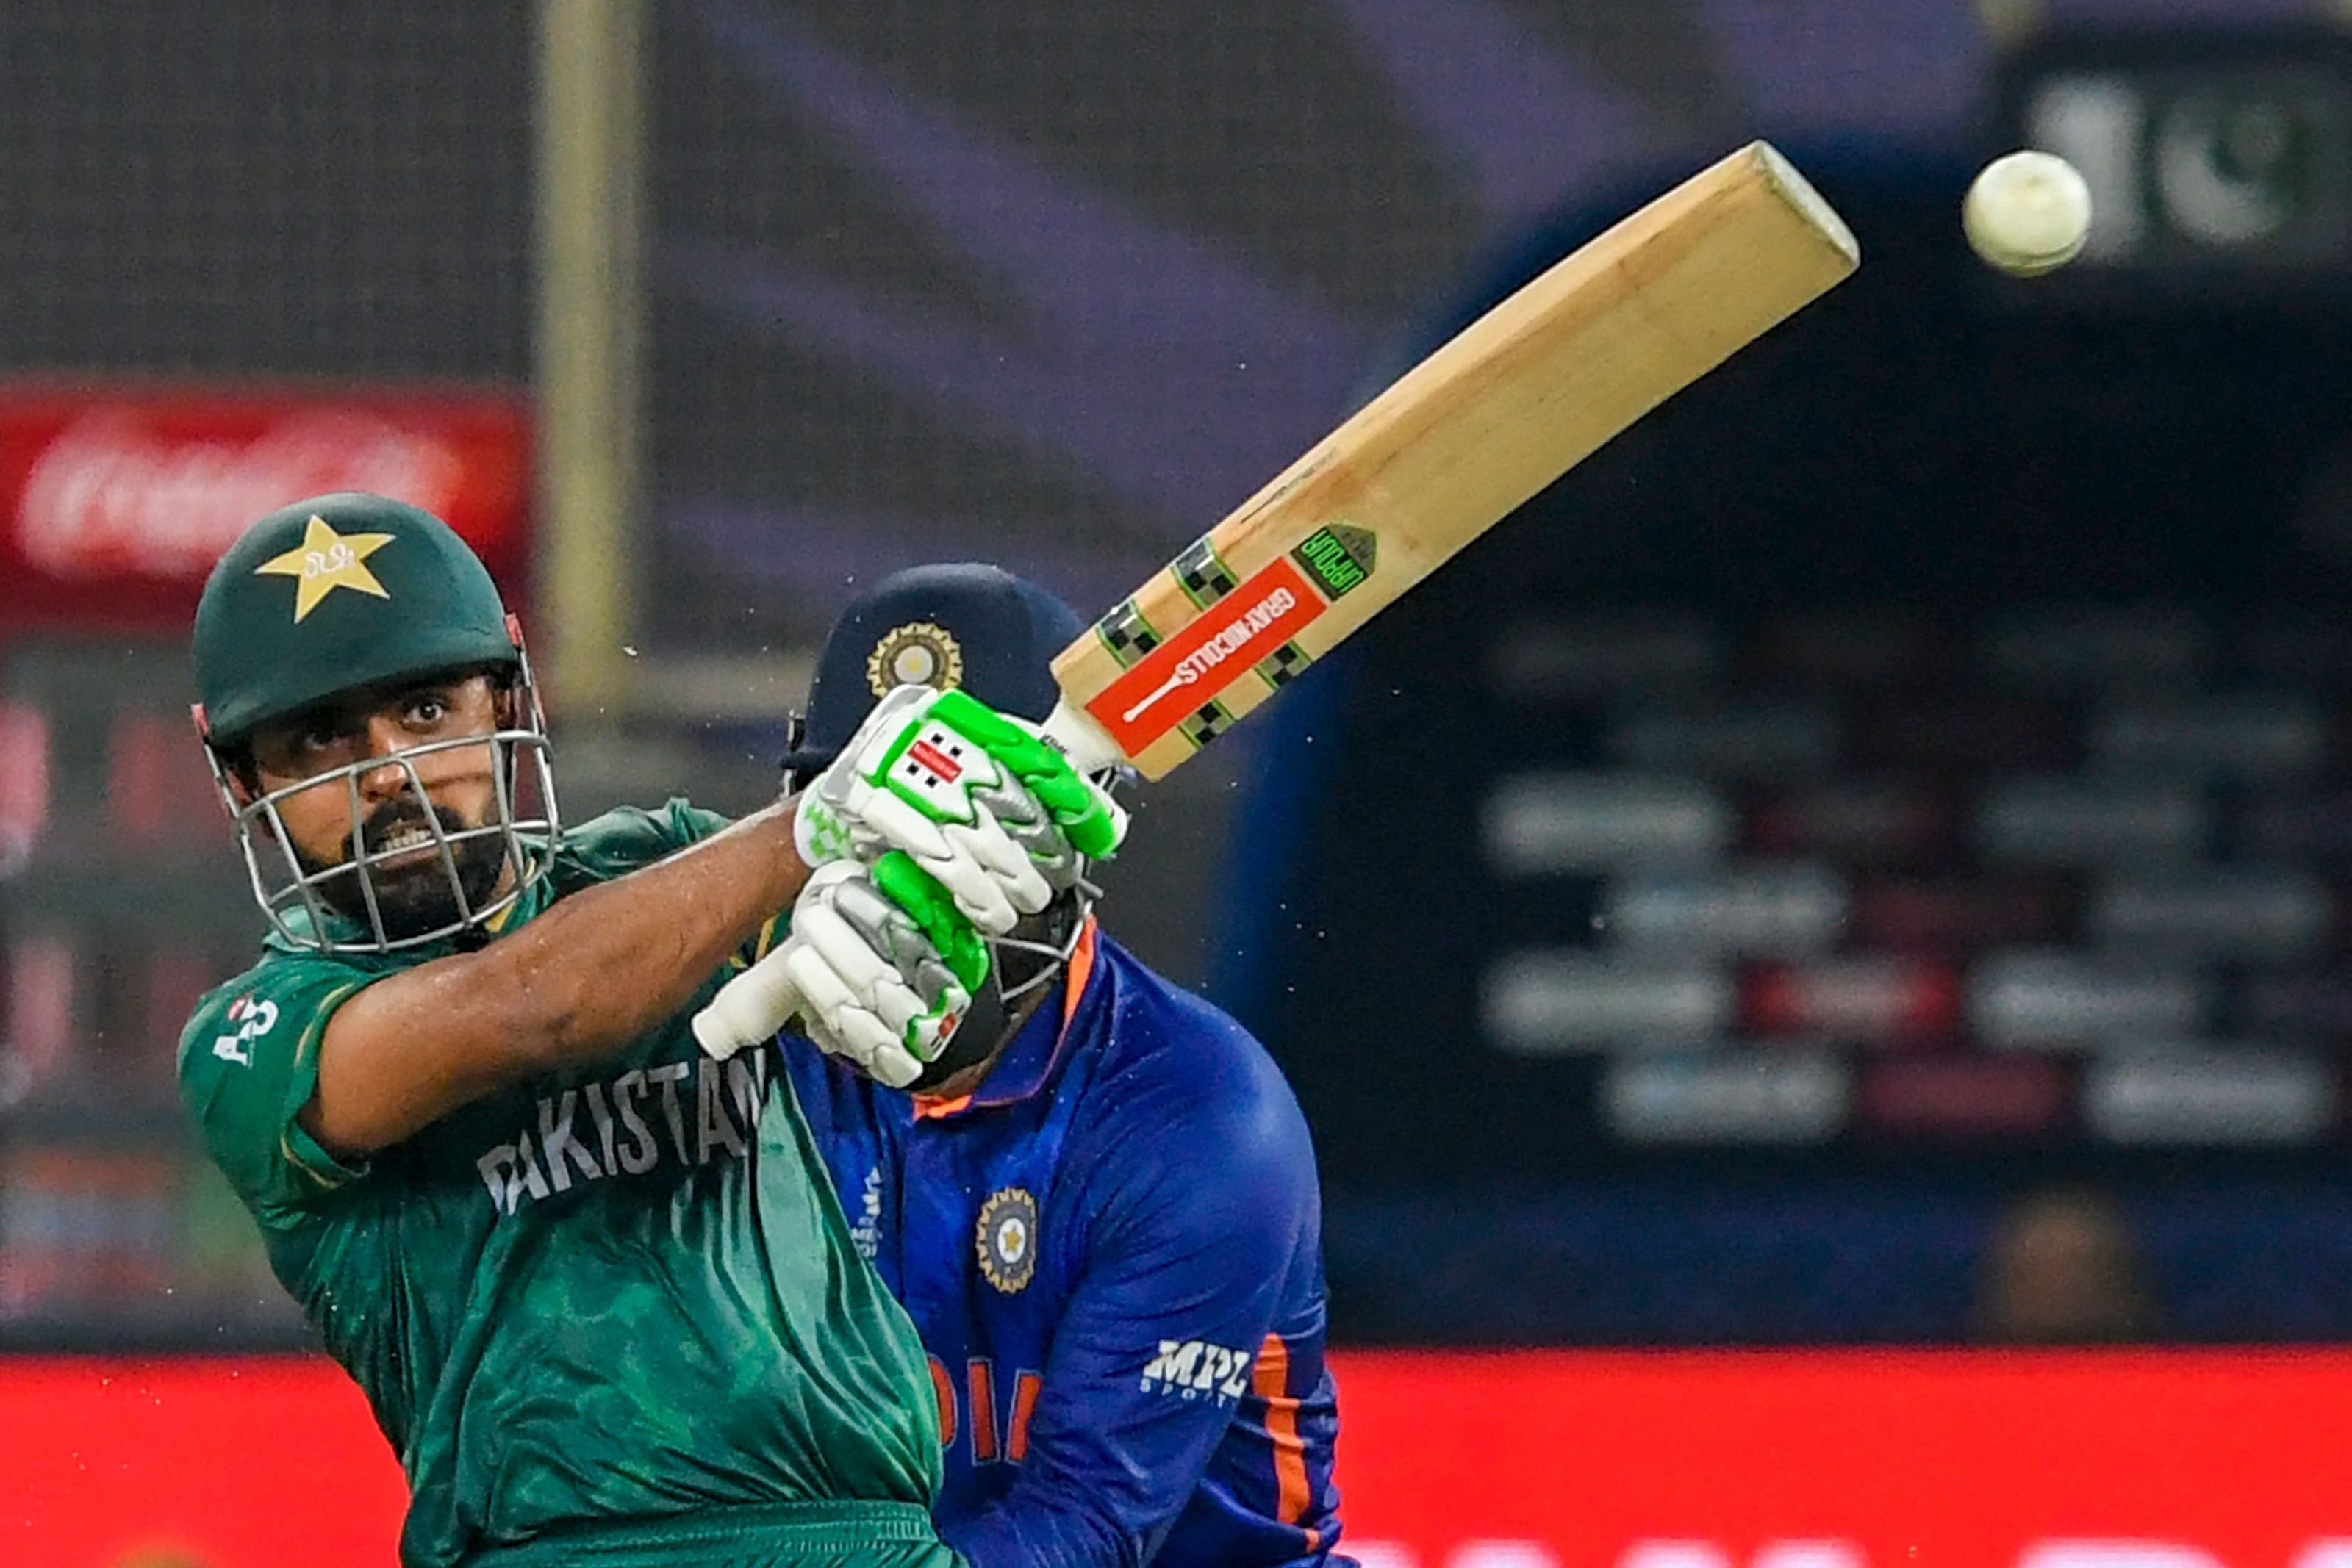 Pakistan’s captain Babar Azam plays a shot during the ICC mens Twenty20 World Cup cricket match between India and Pakistan on 24 October 2021 in Dubai